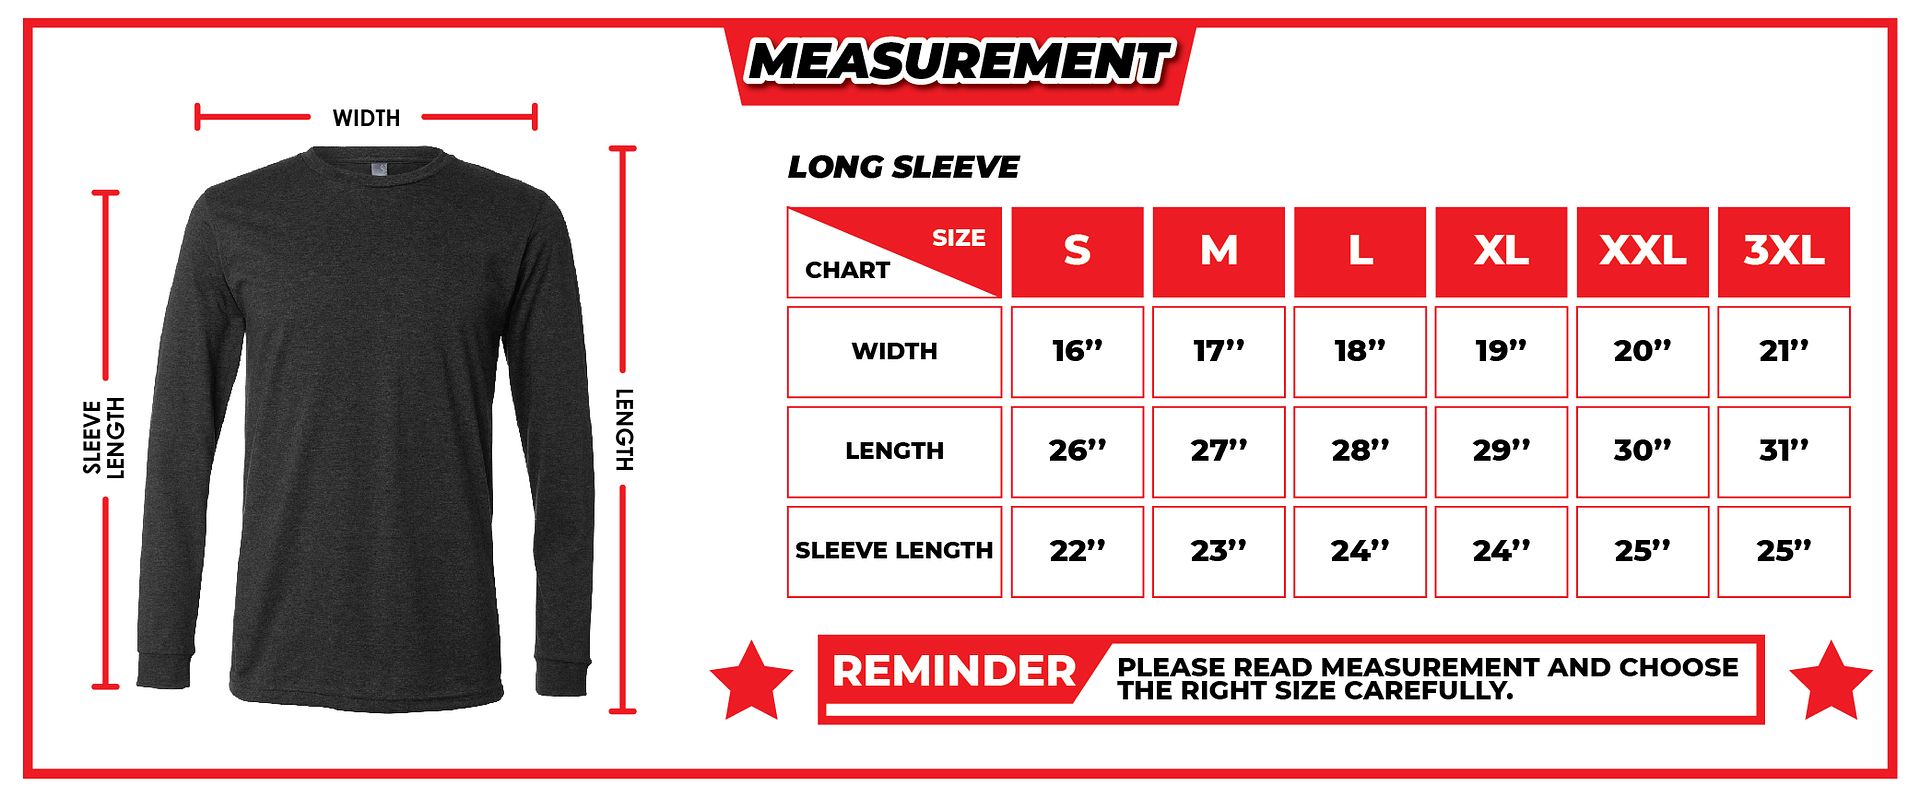 Measurement Baju Long Sleeve.jpg Photo by az-avenue | Photobucket